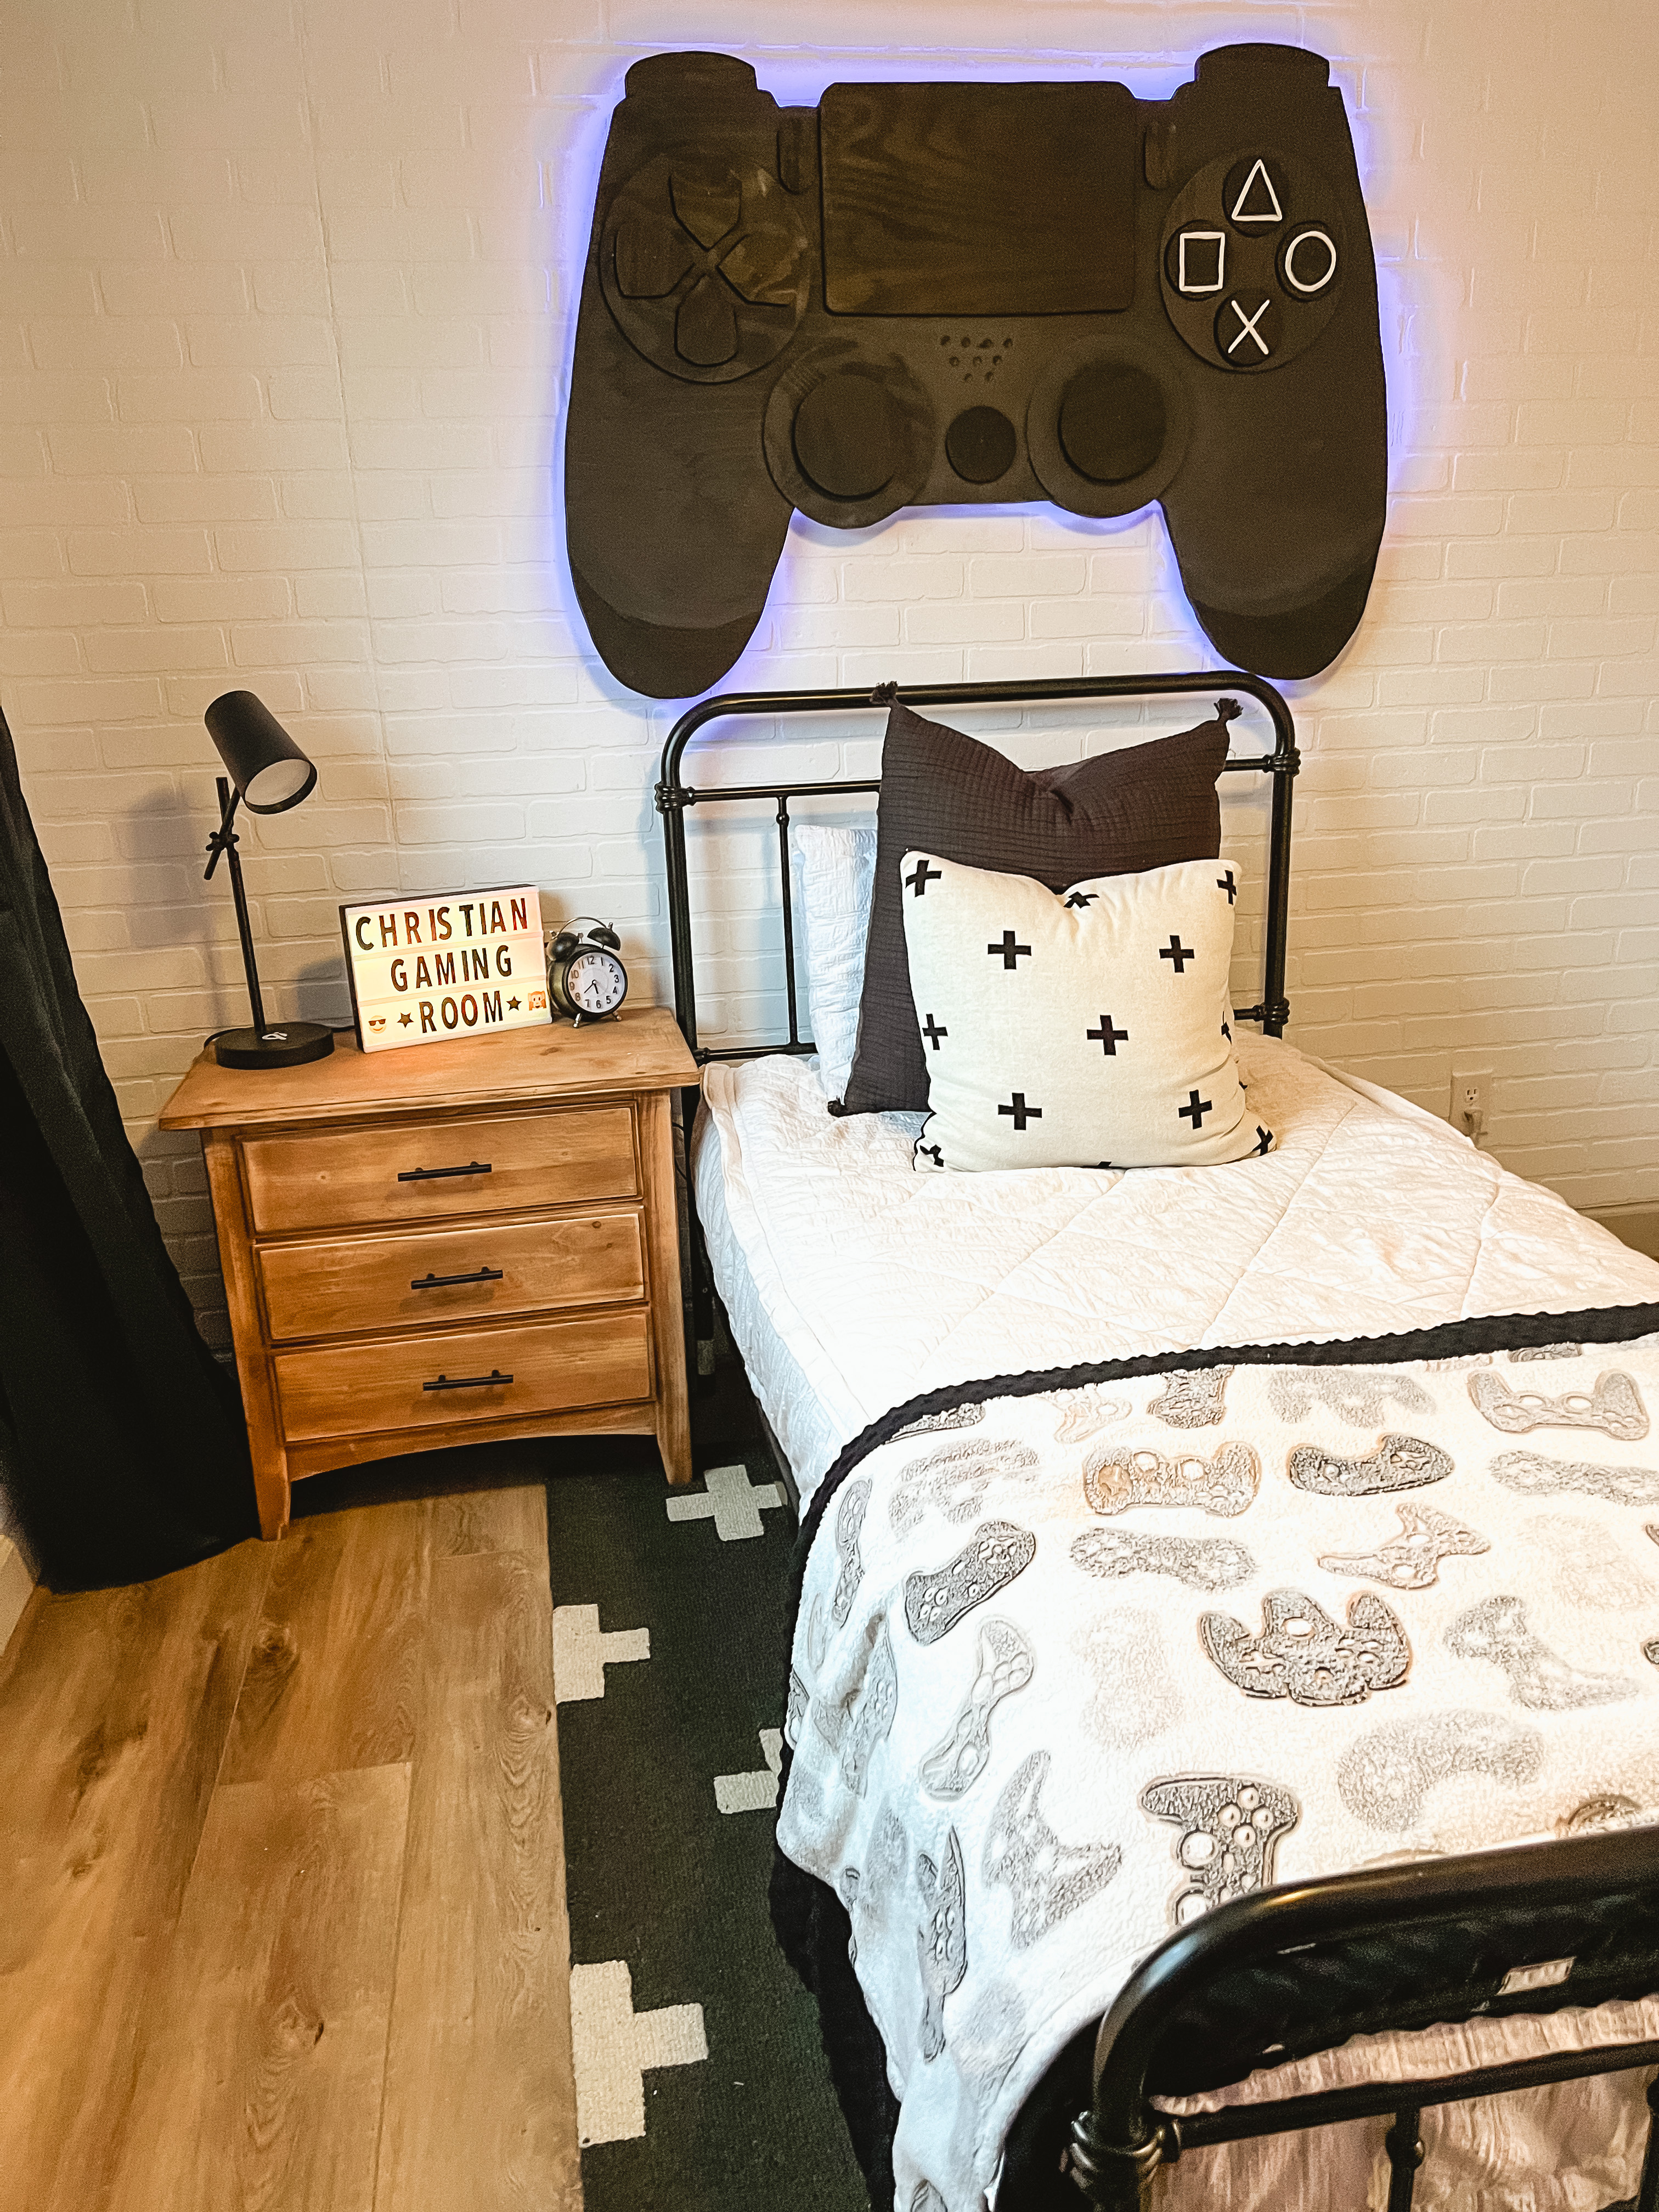 5 Bedroom Gaming Room Ideas